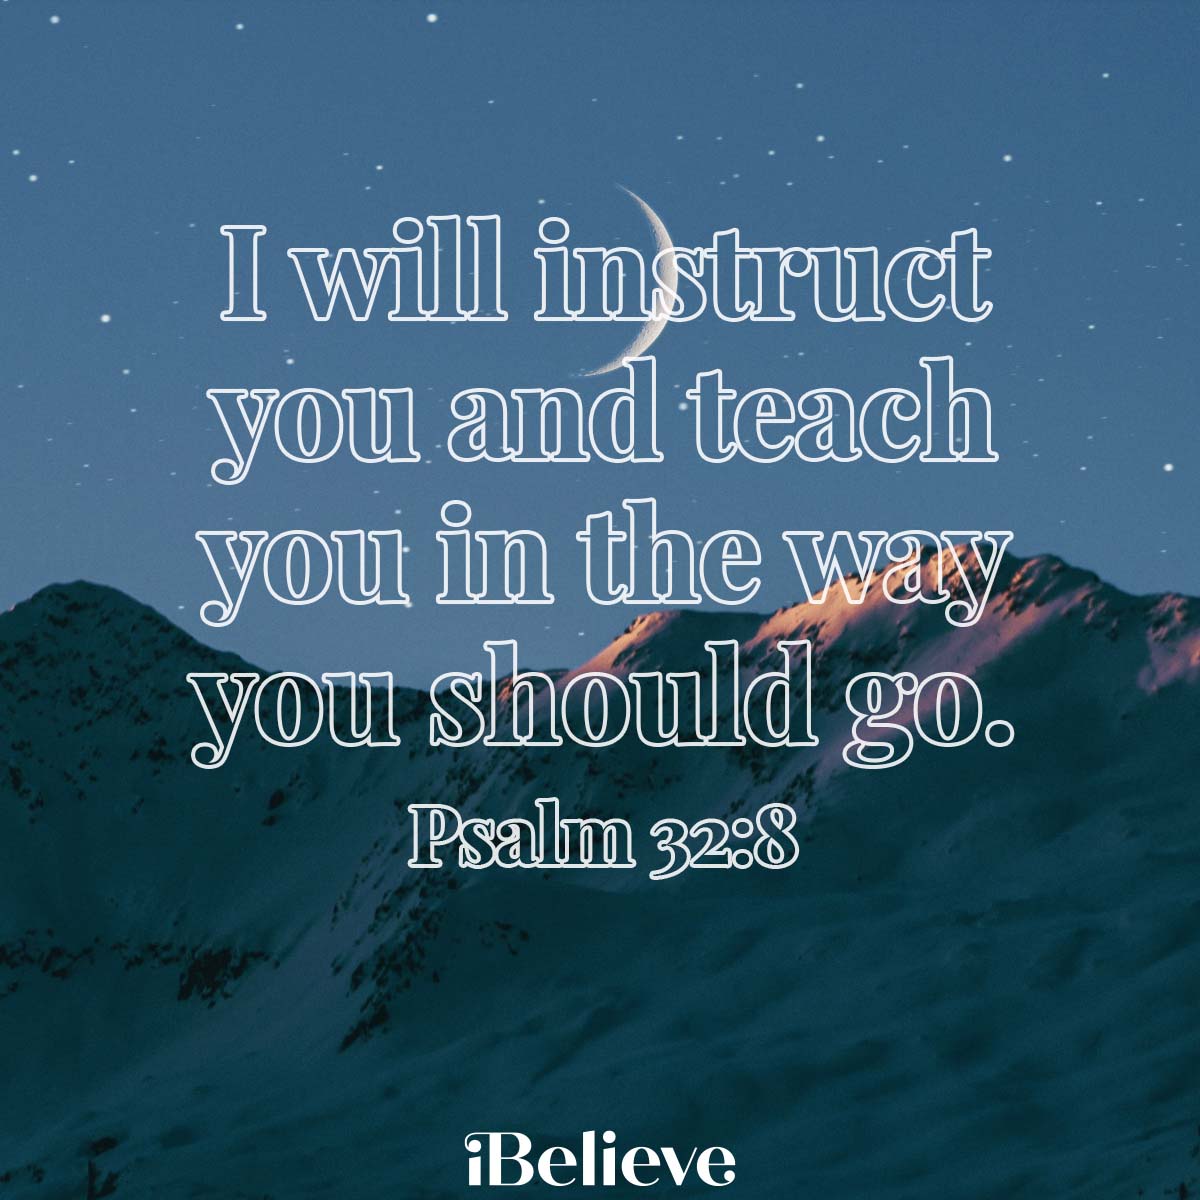 Psalm 32:8, inspirational image